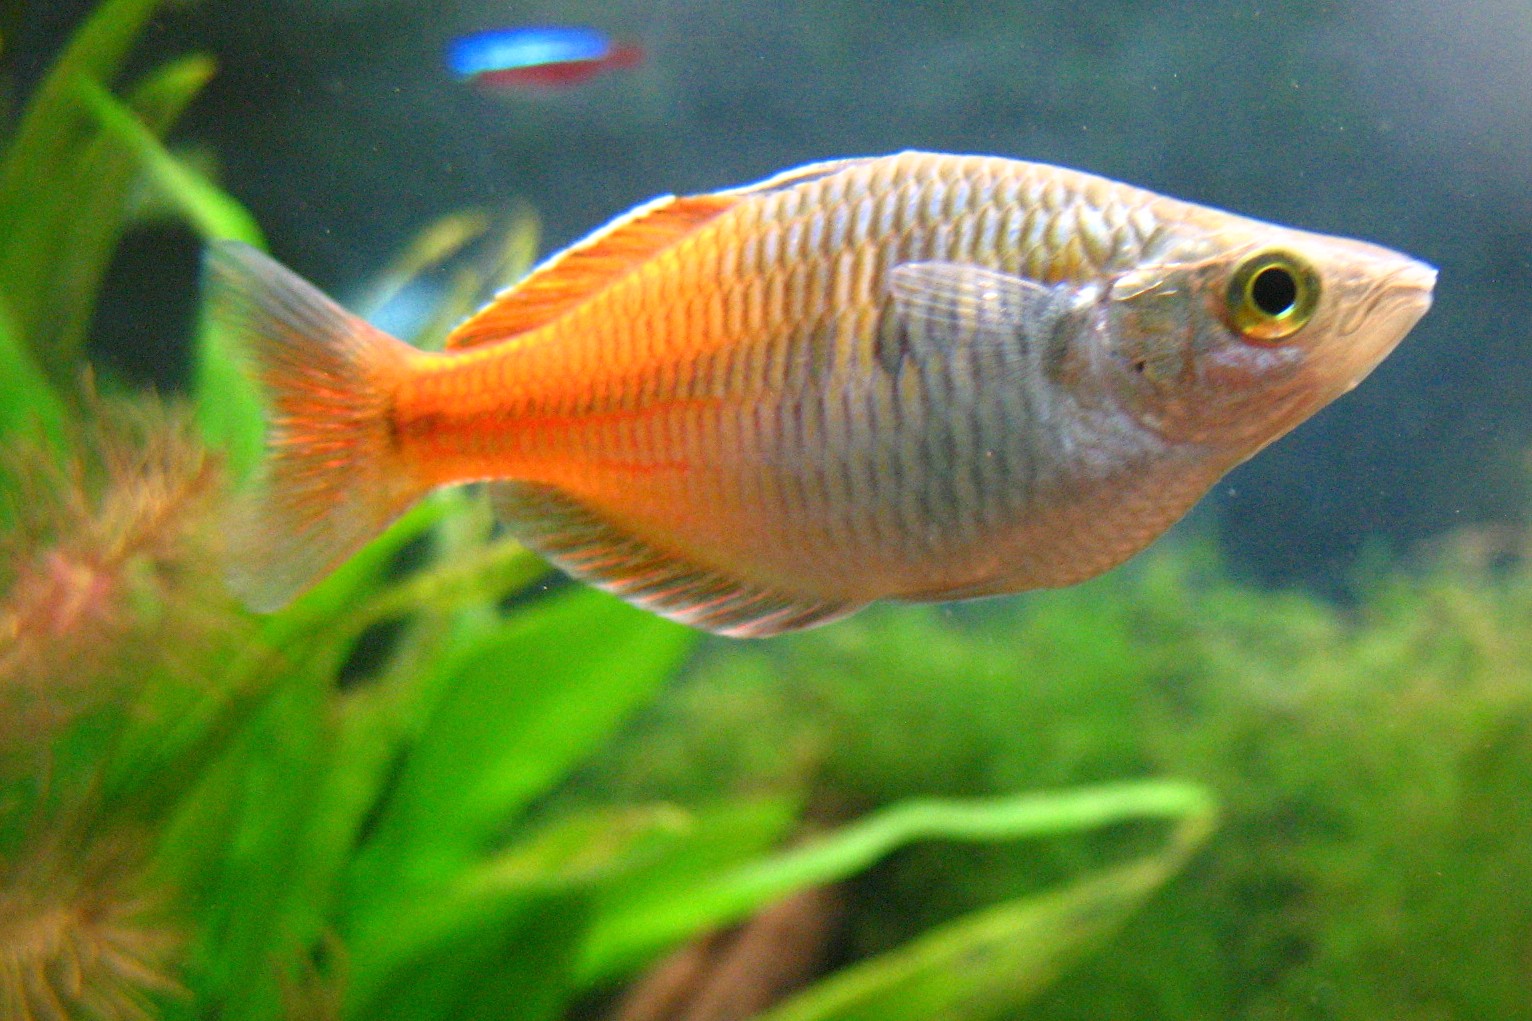 an orange and white fish swimming in a green aquarium